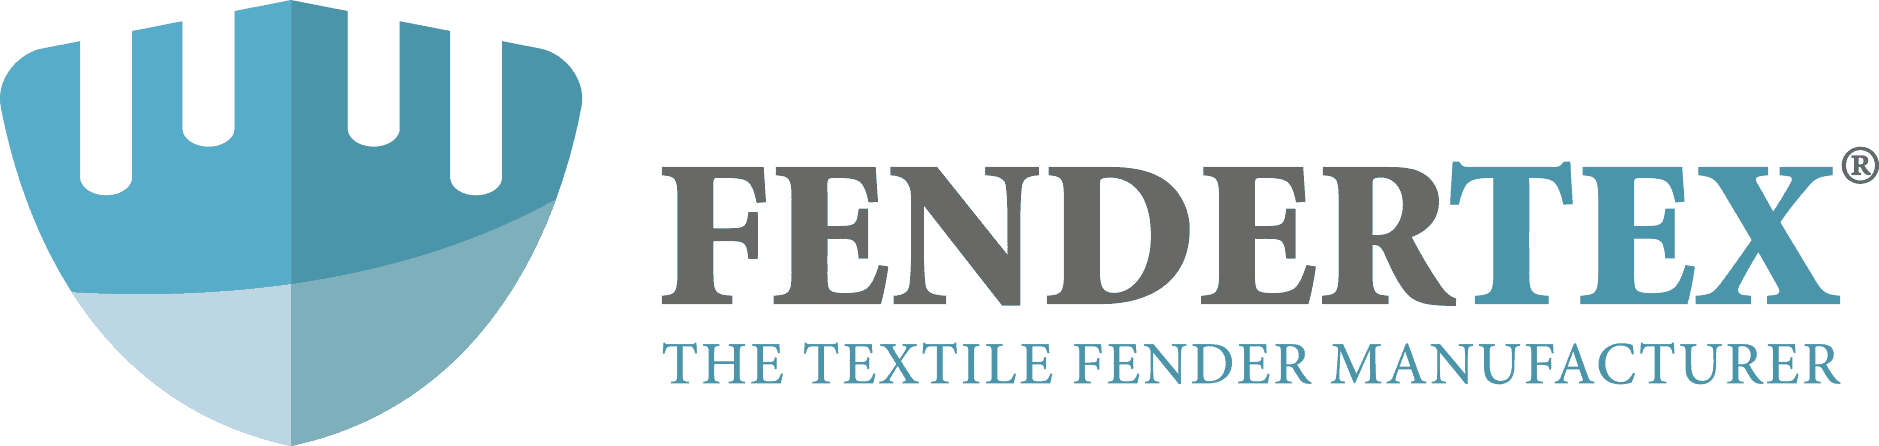 Fendertex_logo.eps